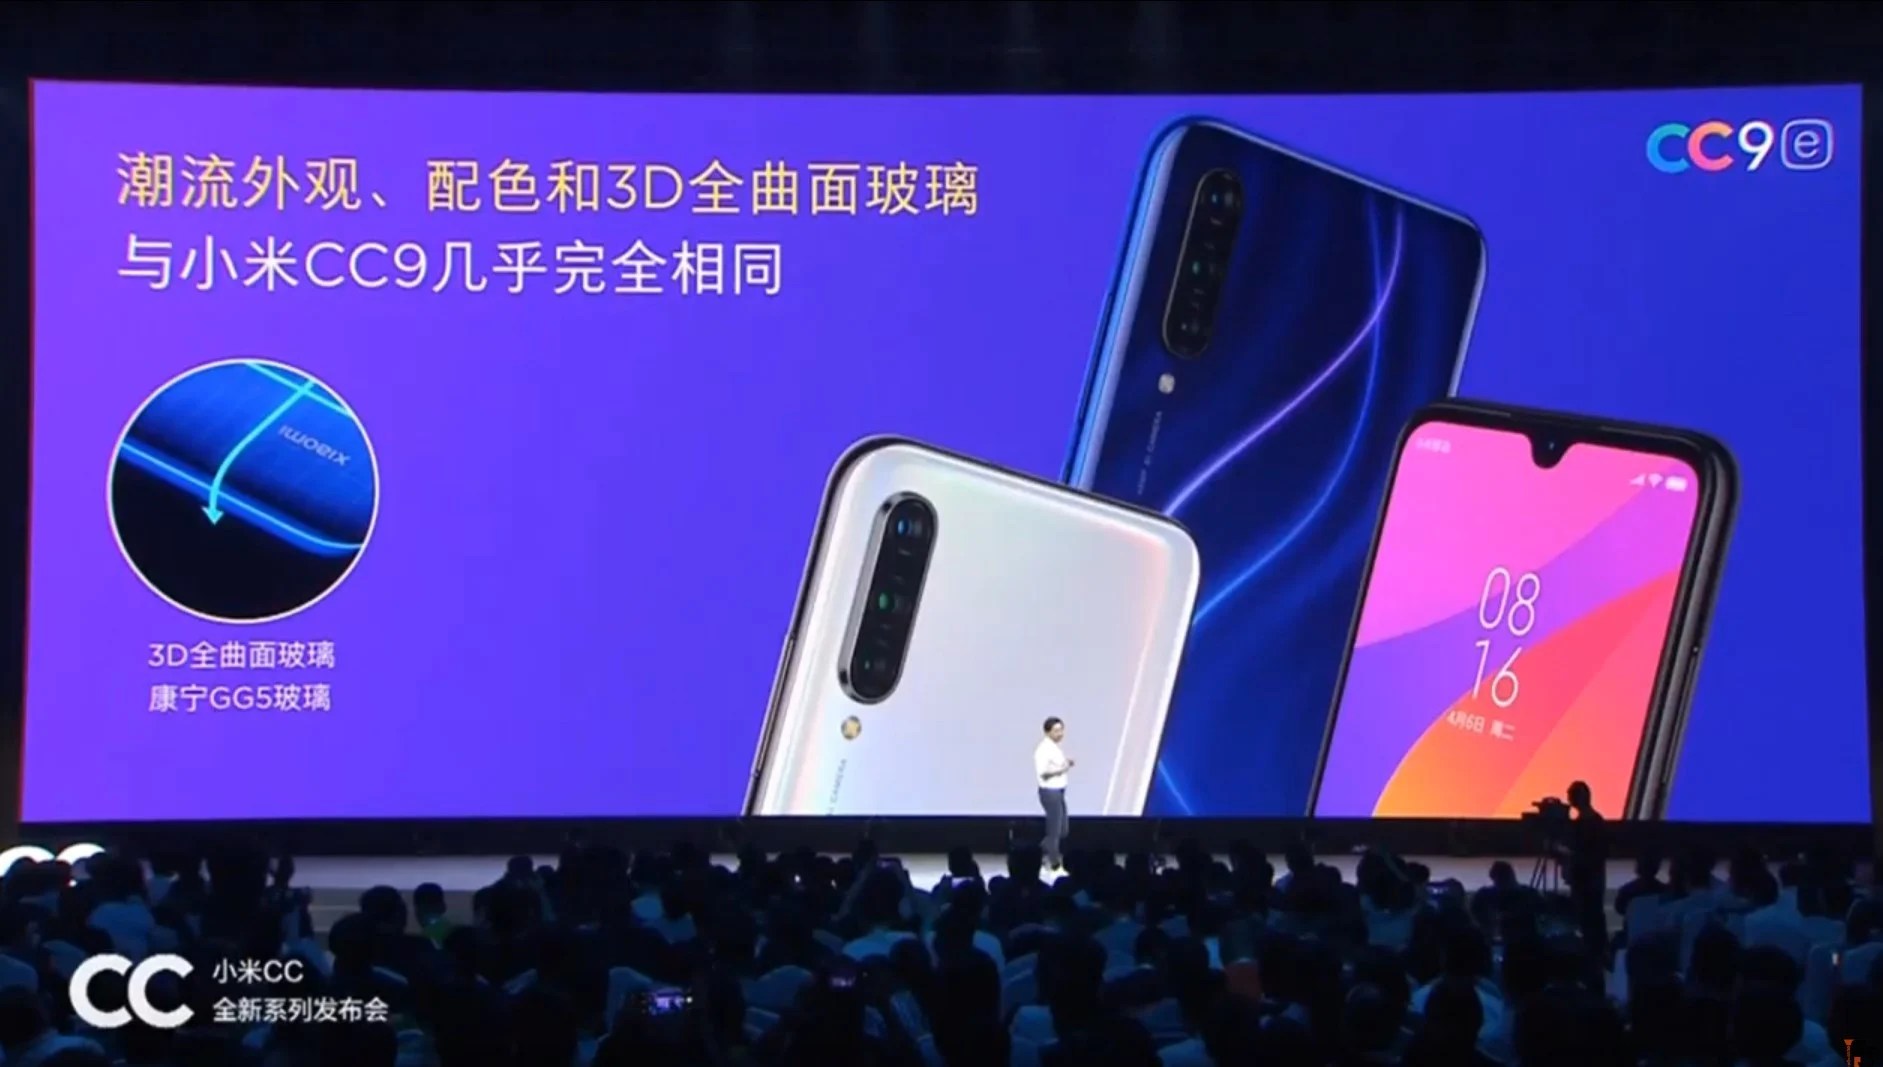 Xiaomi CC9 s